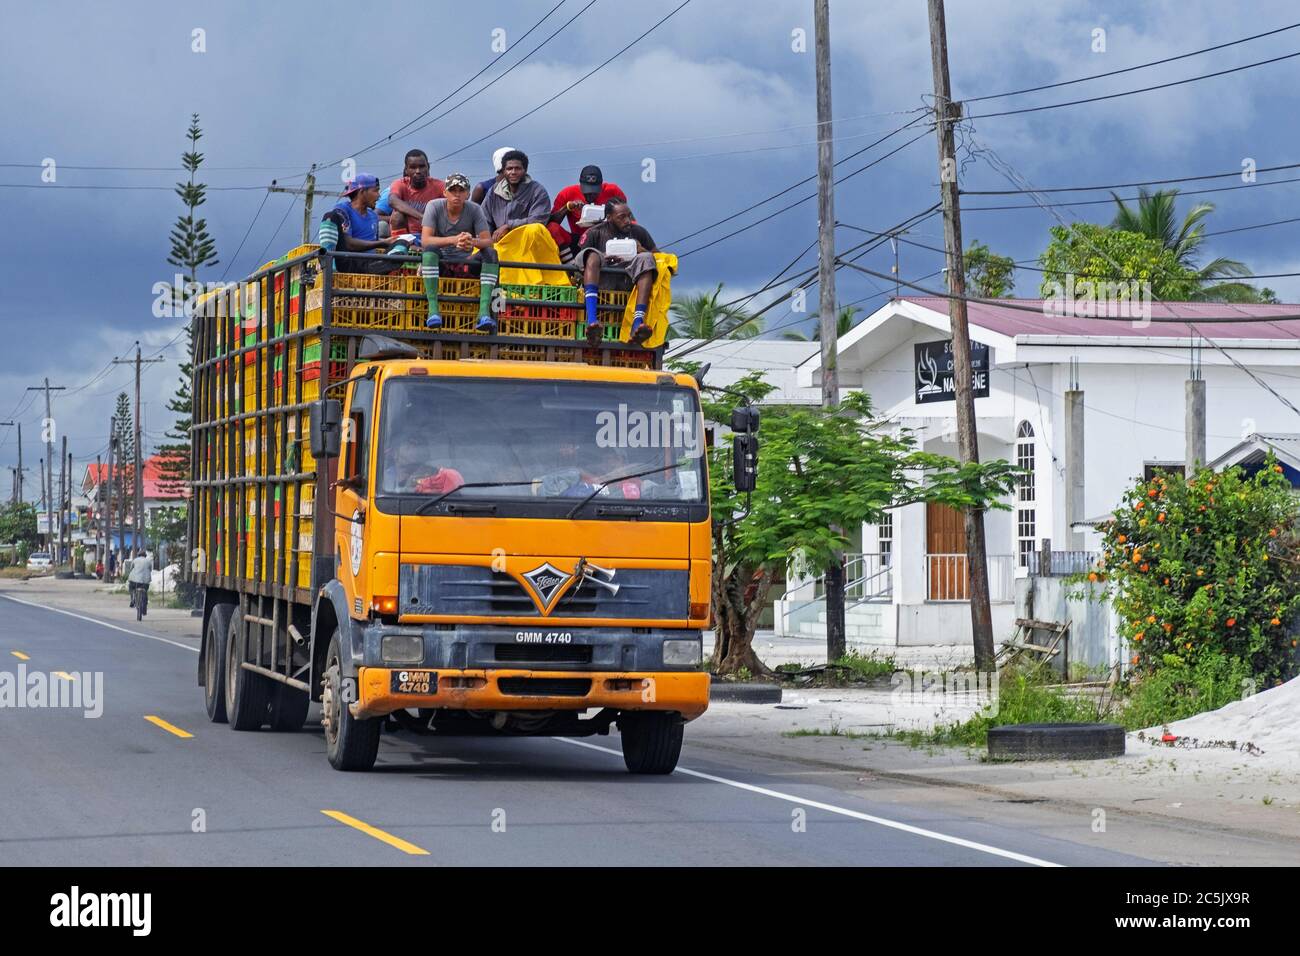 Workers on top of heavily laden truck in the village Soesdyke, Essequibo Islands-West Demerara Region, Guyana, South America Stock Photo